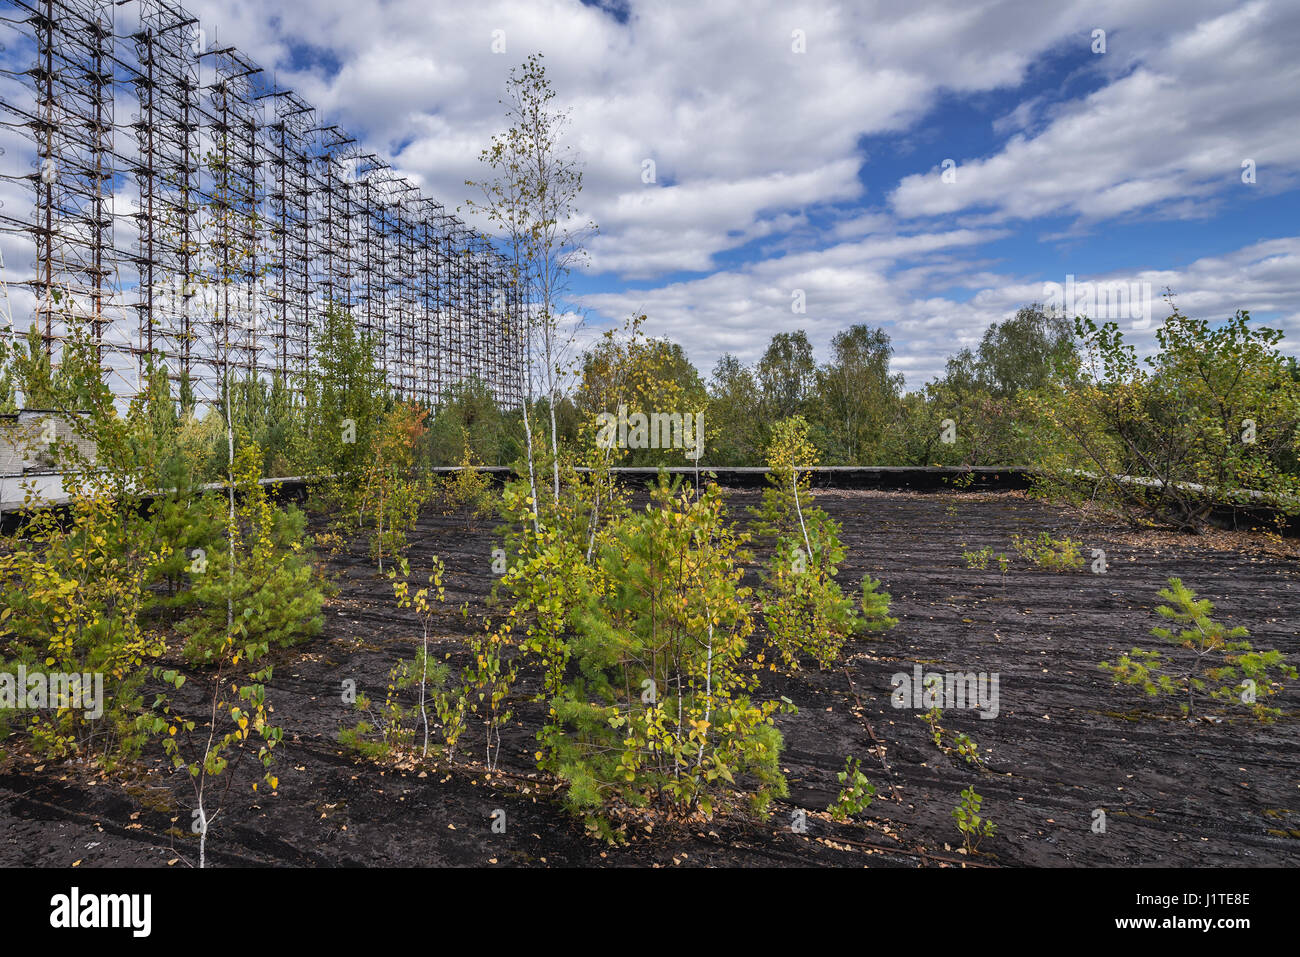 Duga-Radarsystem in Chernobyl-2 Militärbasis, Chernobyl Nuclear Power Plant Zone der Entfremdung in der Ukraine Stockfoto